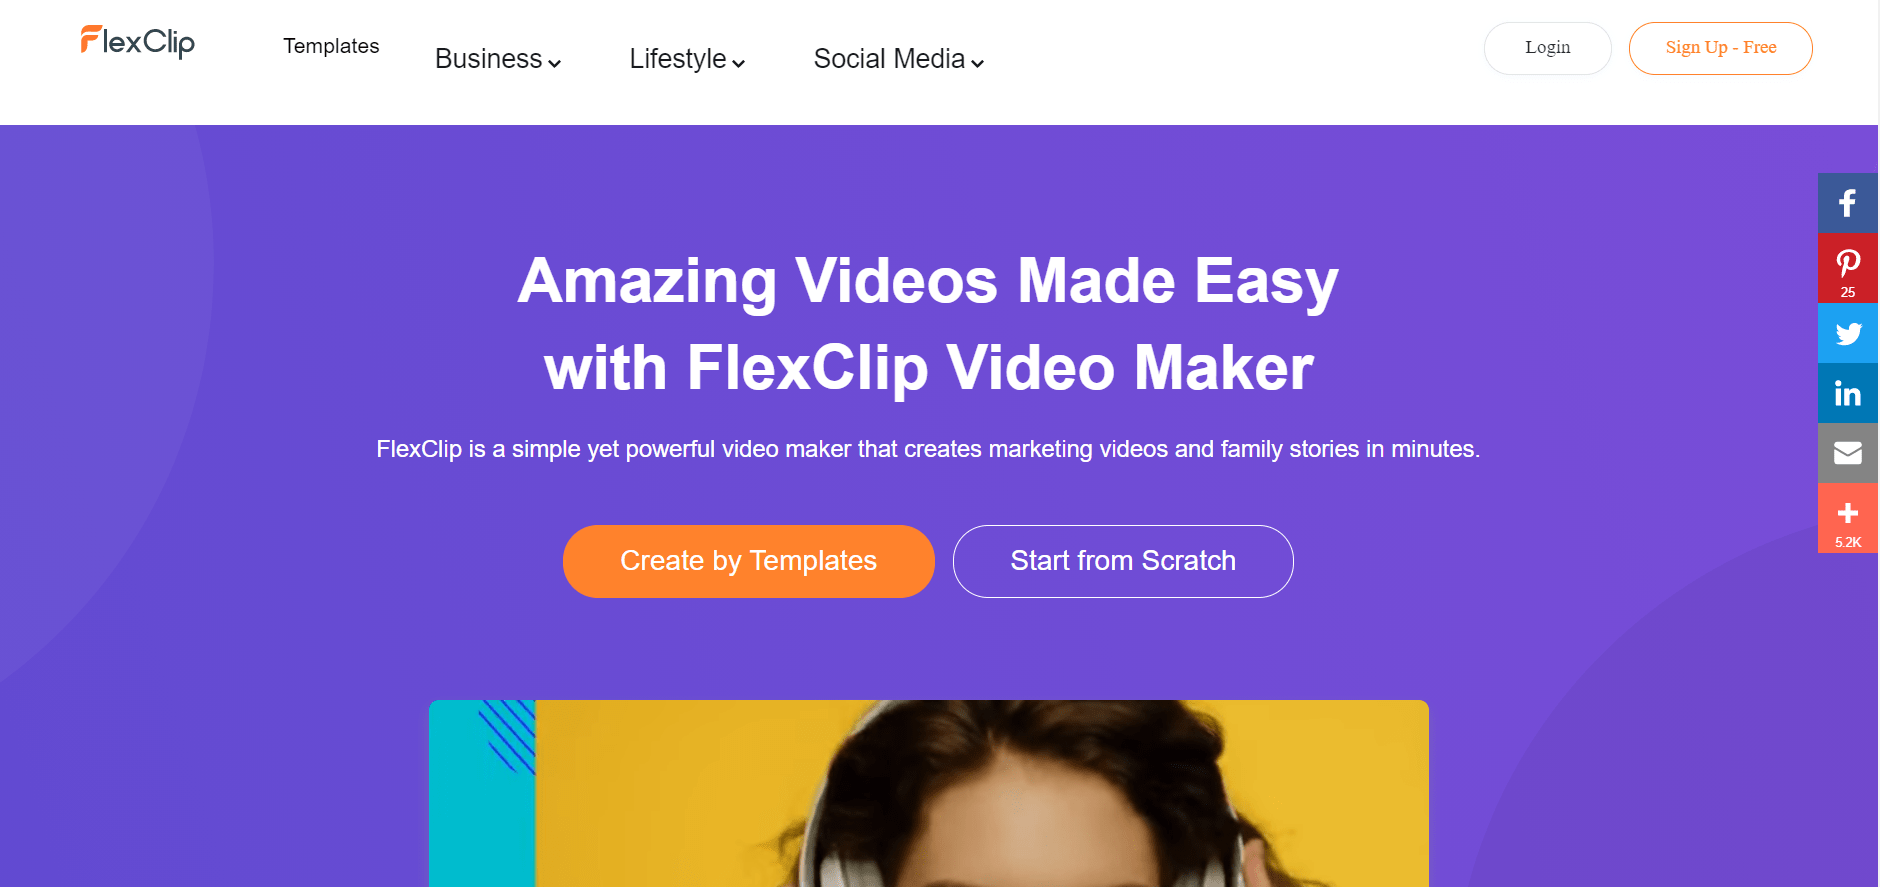 What is Flexclip